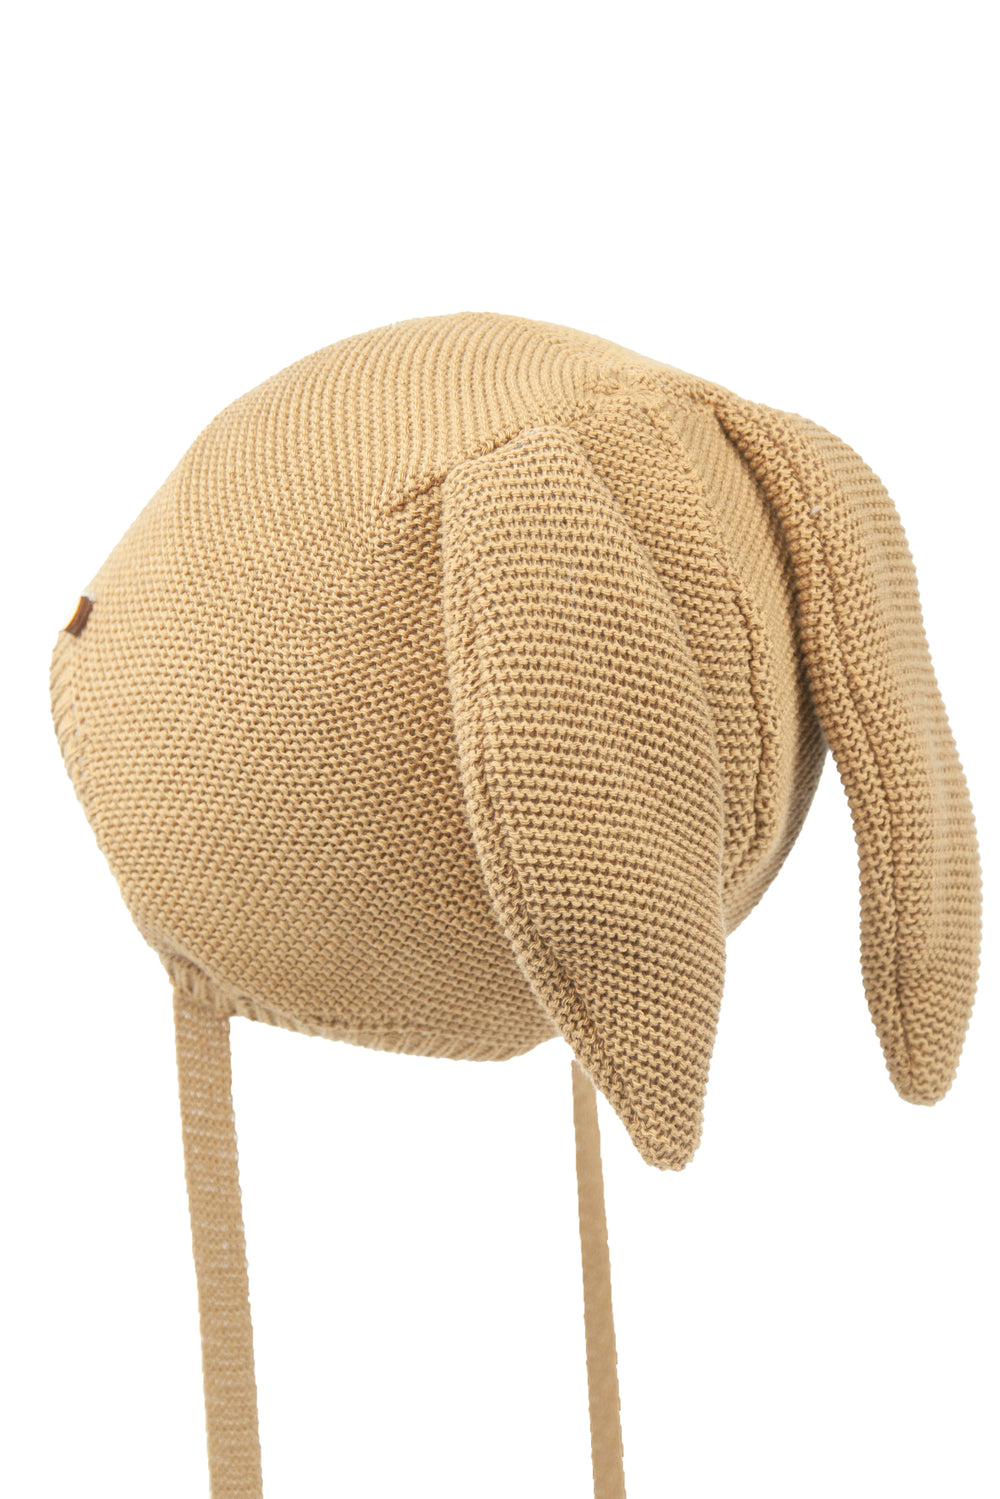 Jamiks "Bugs" Caramel Knit Bunny Hat | iphoneandroidapplications